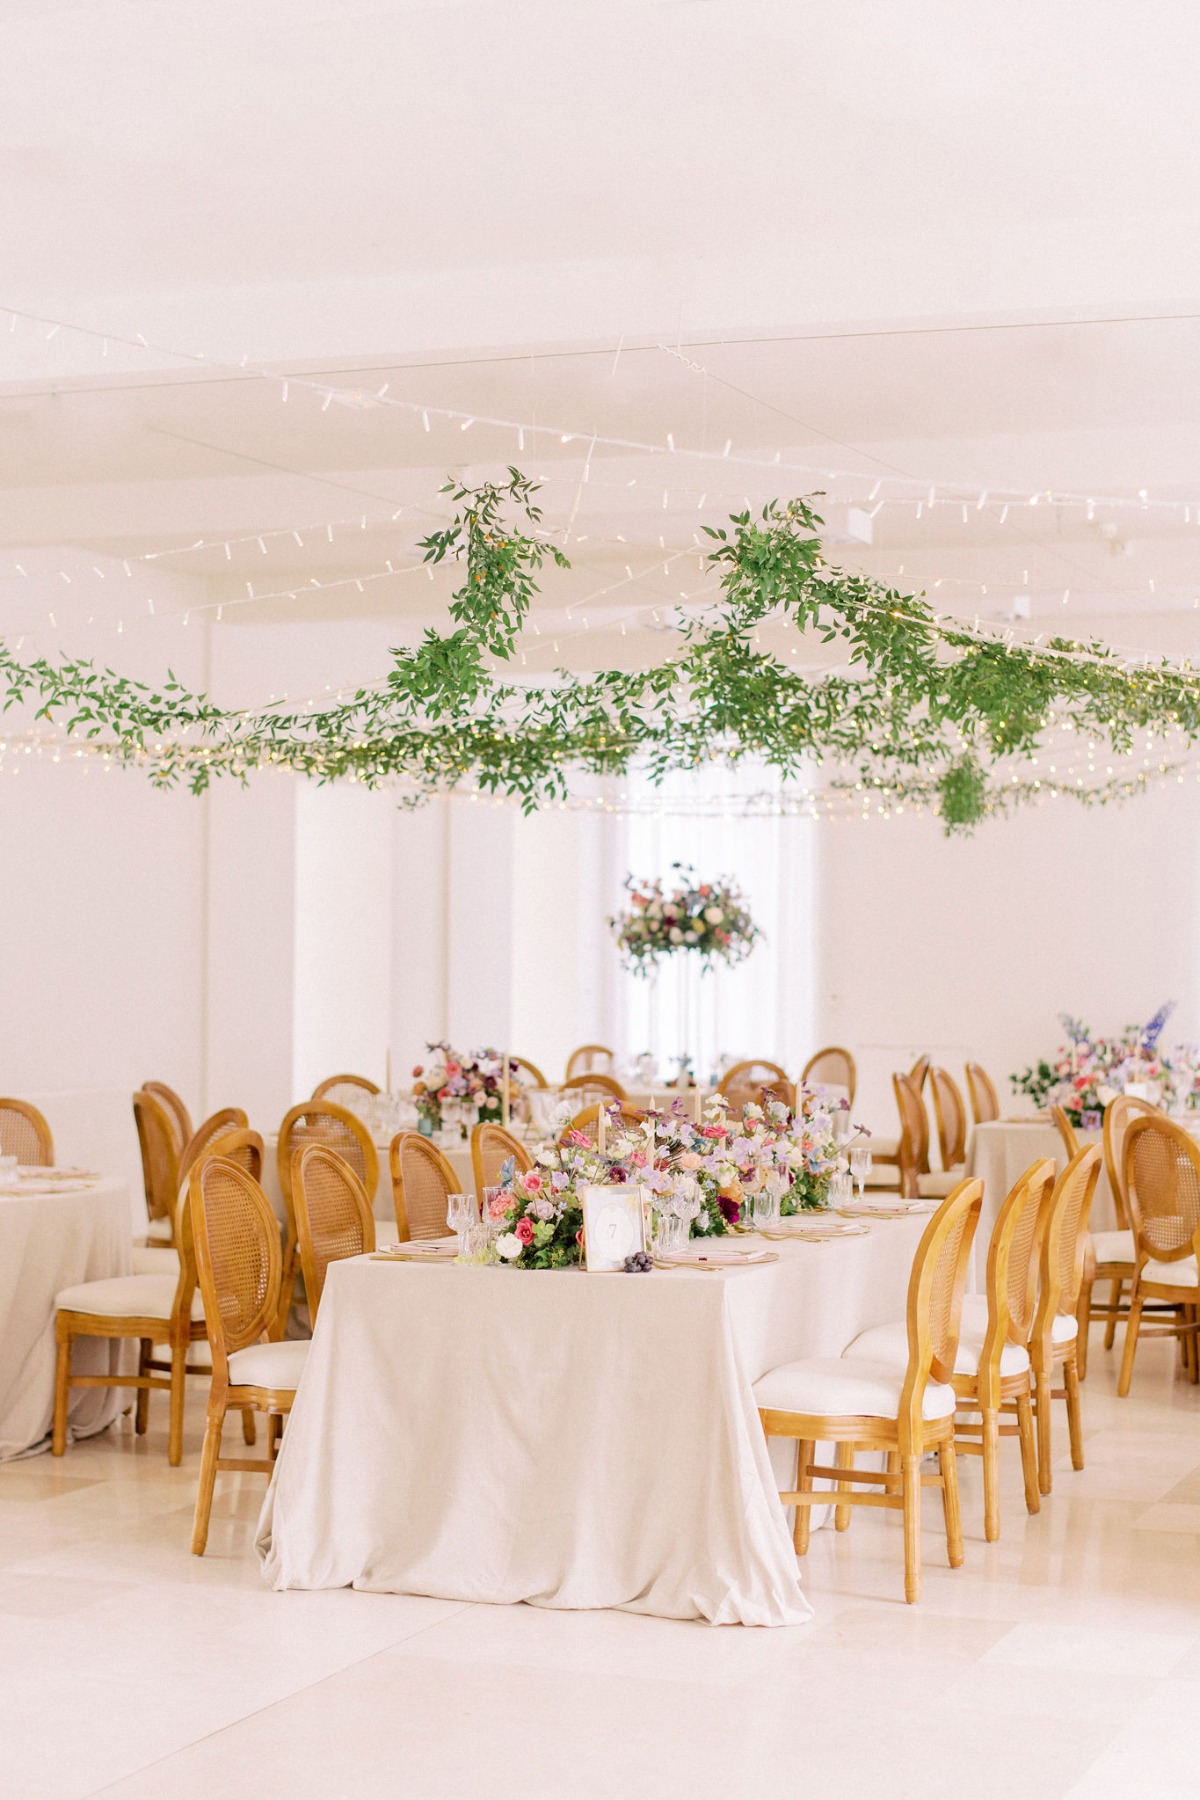 Colorful indoor greenery wedding reception